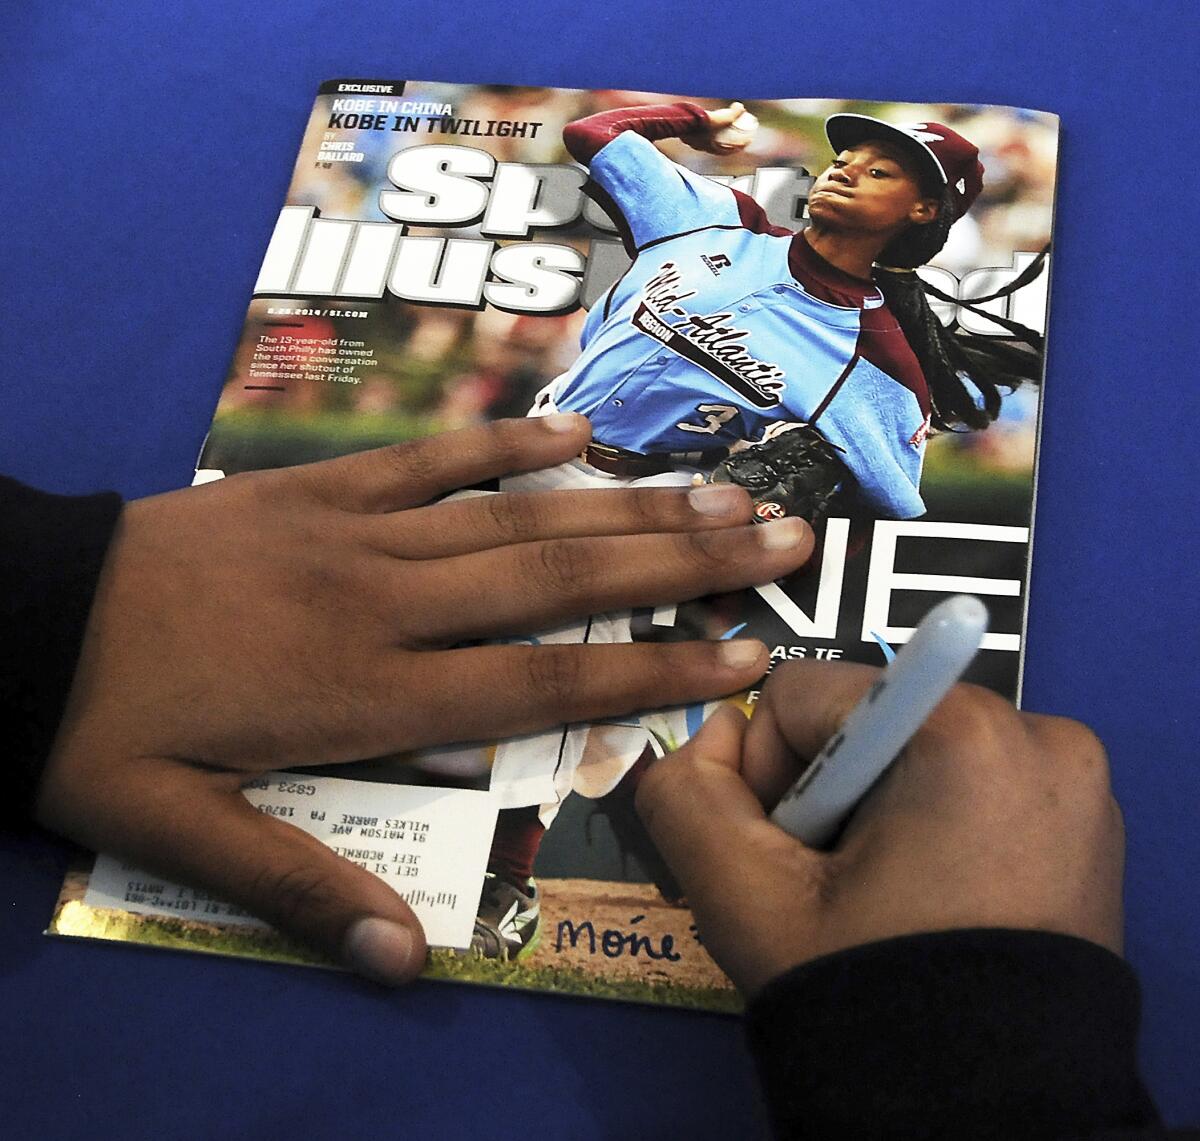 Mo'ne Davis isn't your average summer intern for Dodgers - Los Angeles Times